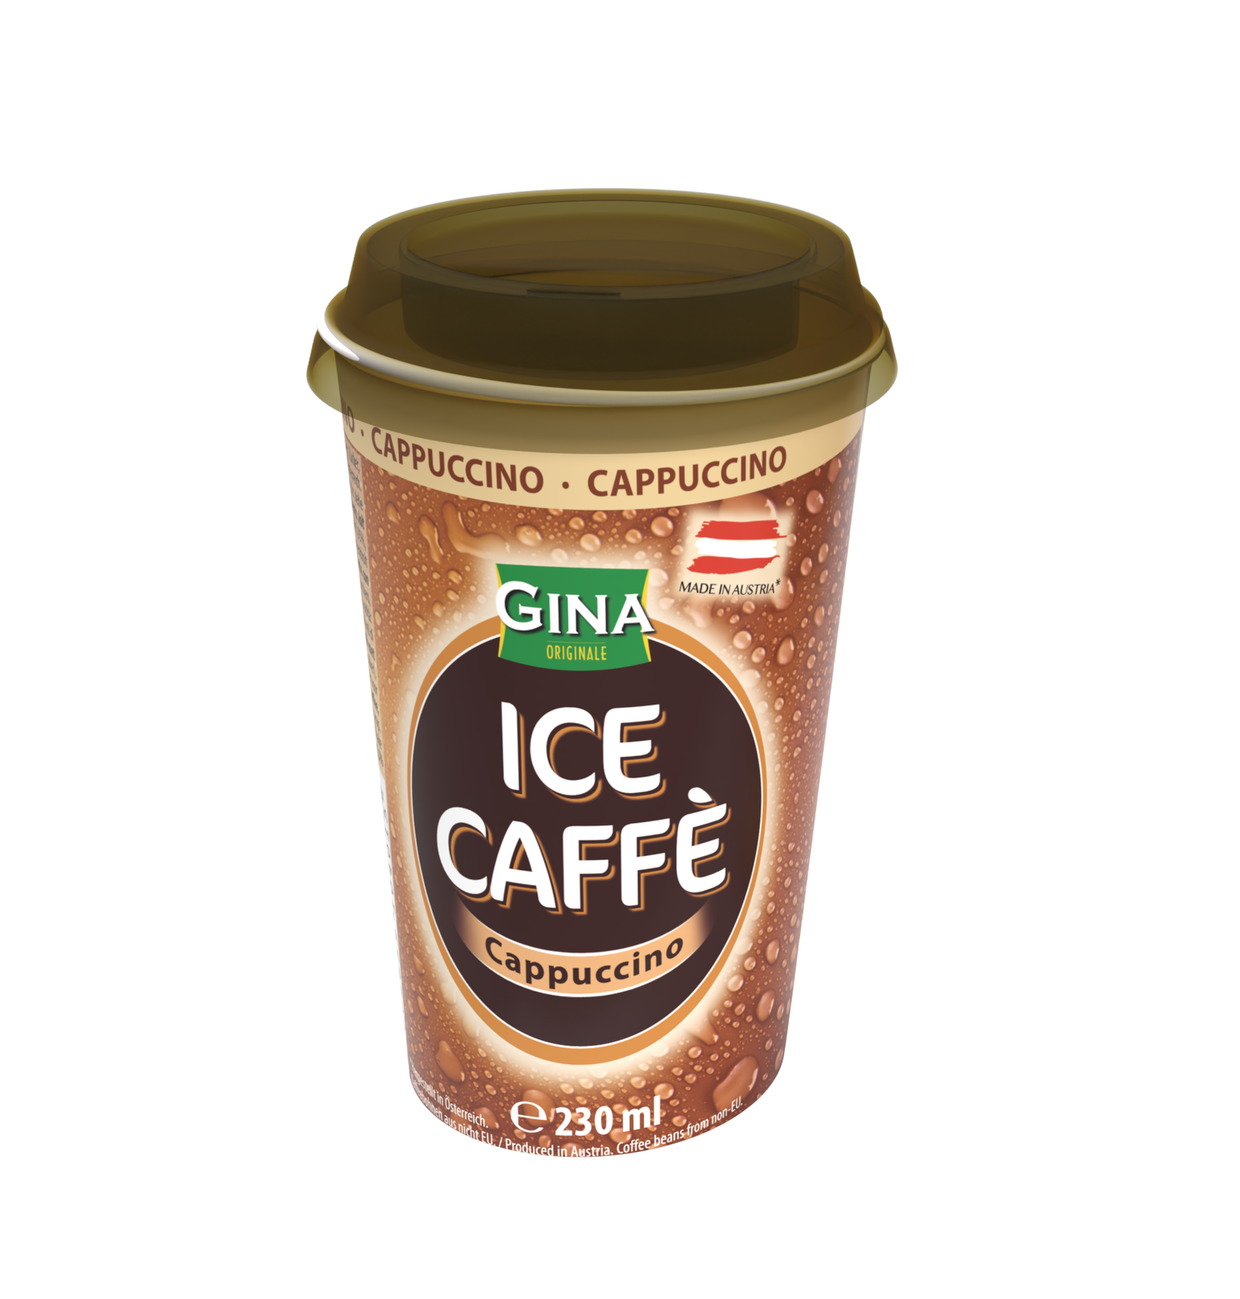 Iced coffee - Cappuccino (10 x 230ml)